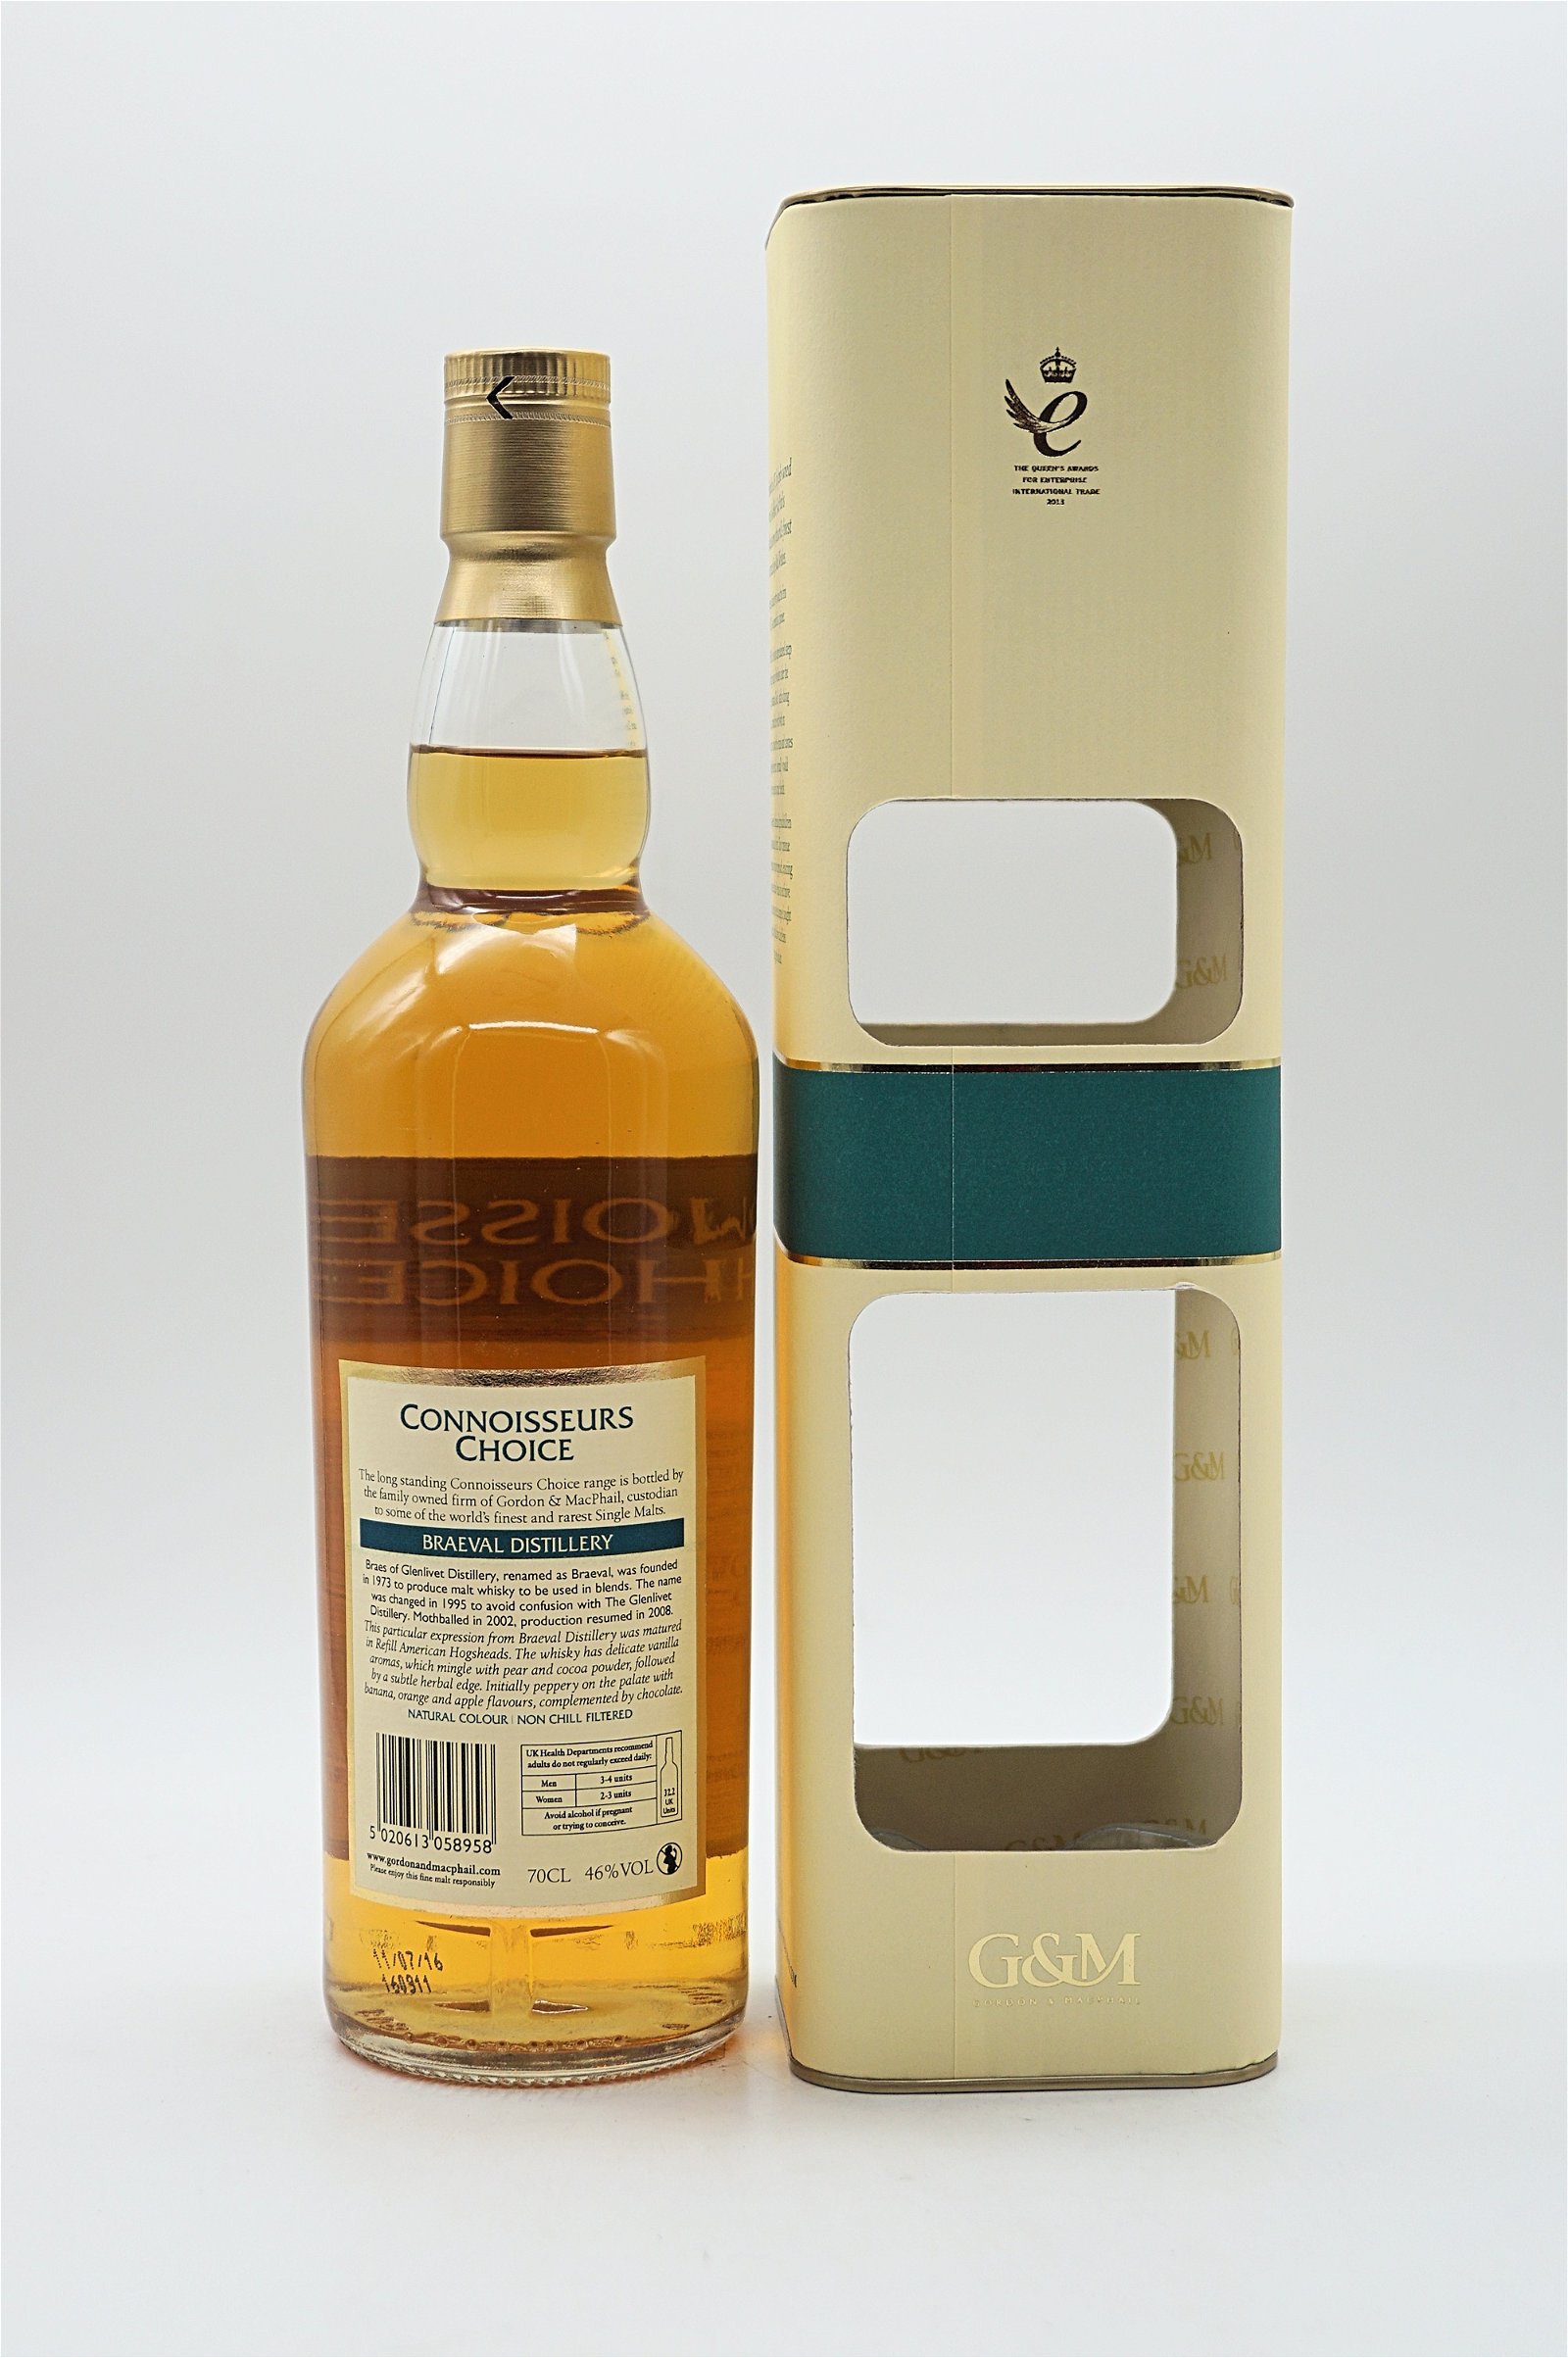 Gordon & Macphail Connoisseurs Choice Braeval 1998/2016 Single Malt Scotch Whisky